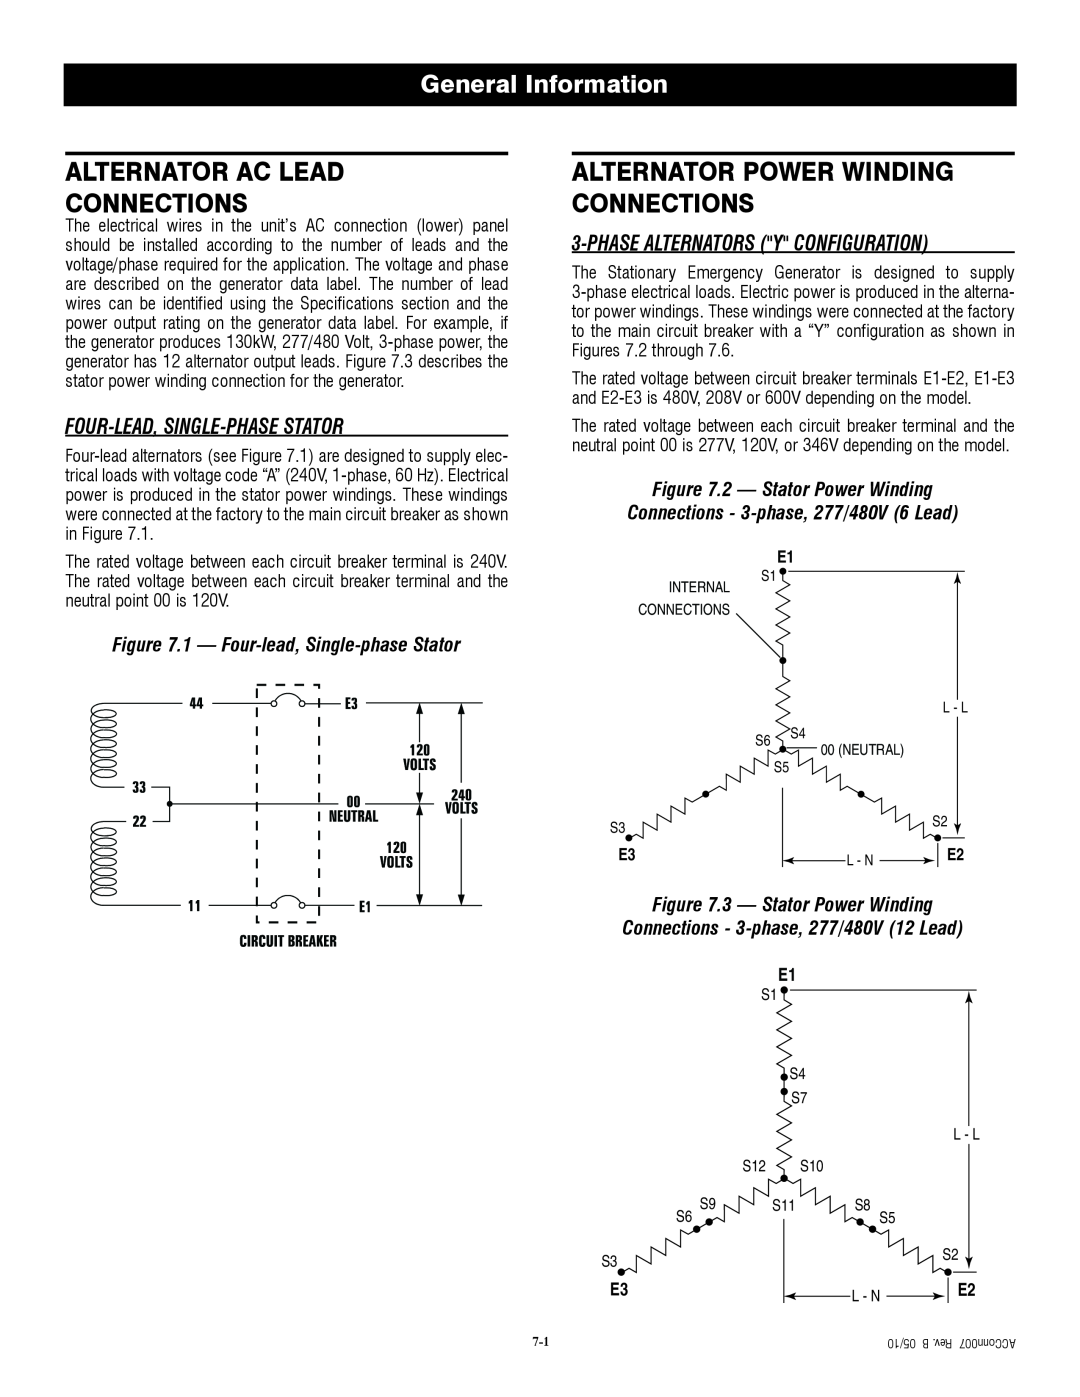 Generac QT04524ANSX Alternator Ac Lead Connections, Alternator Power Winding Connections, Four-Lead, Single-Phasestator 